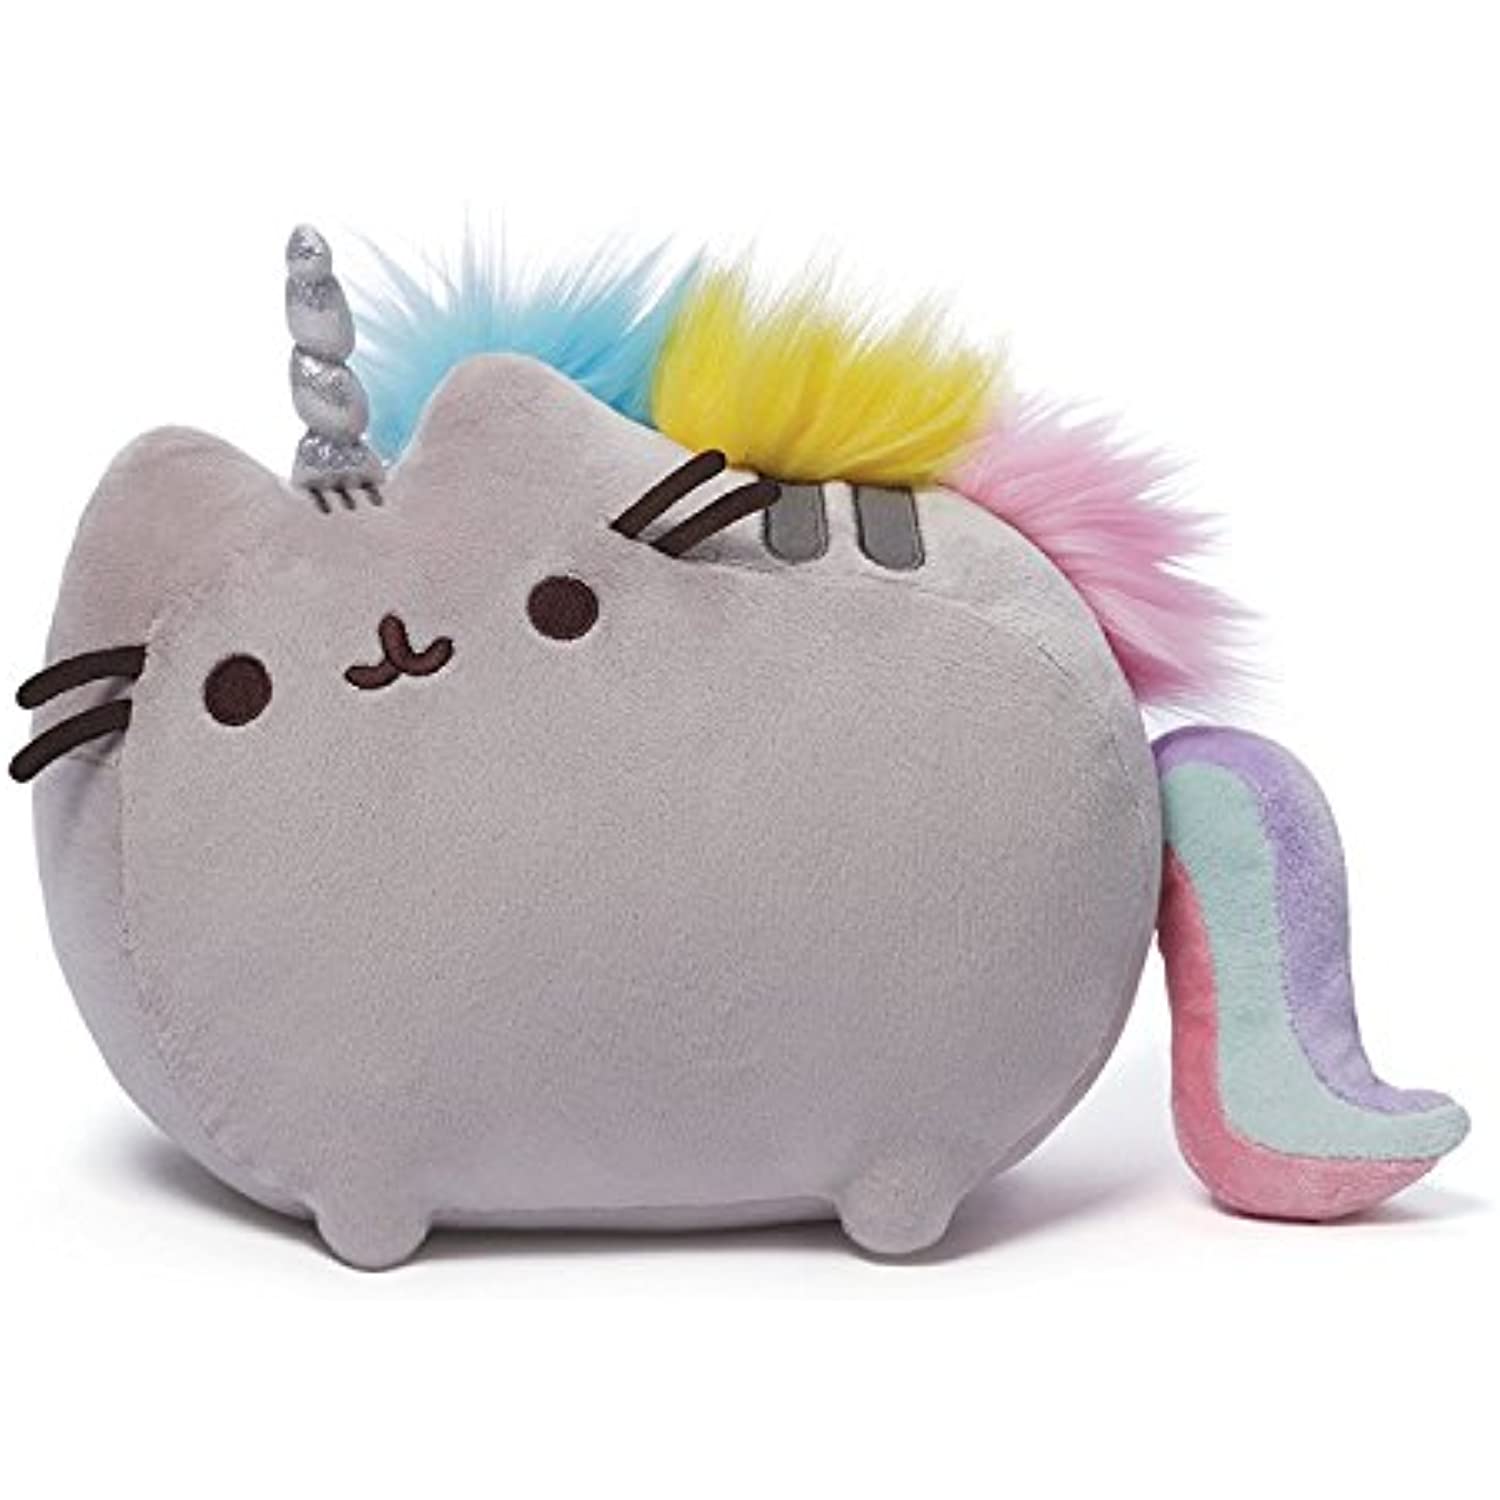 GUND Pusheenicorn Stuffed Pusheen Plush Unicorn Bundled with Pusheen Cat Plush Stuffed Animal